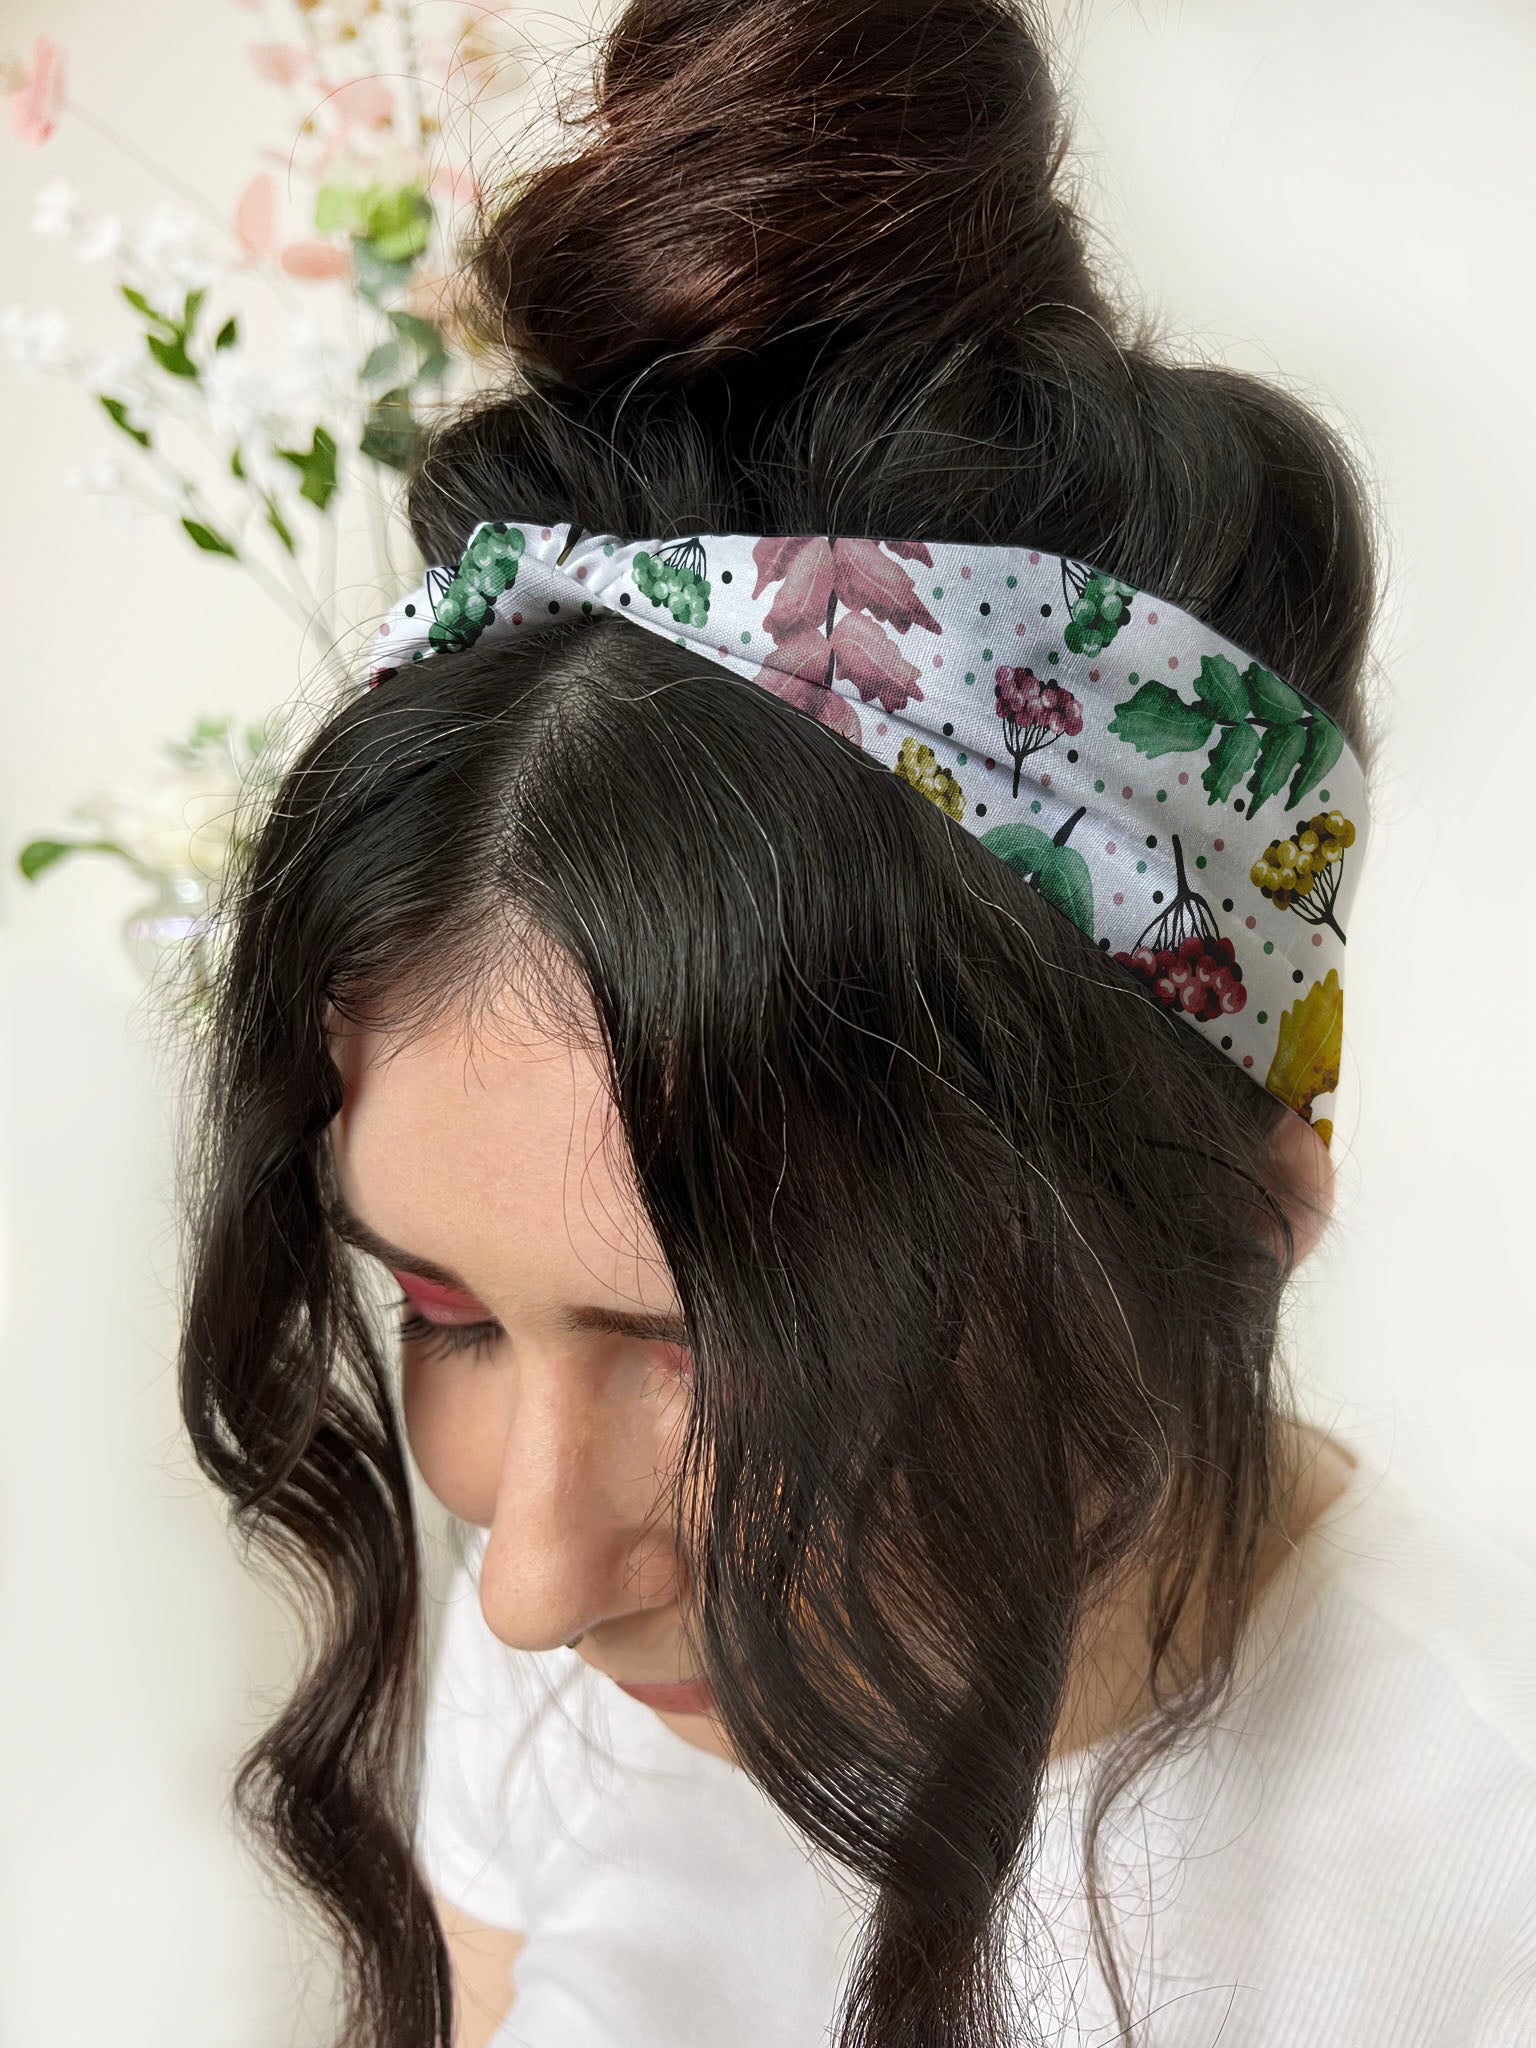 pretty foliage patterned headband on dark haired girl